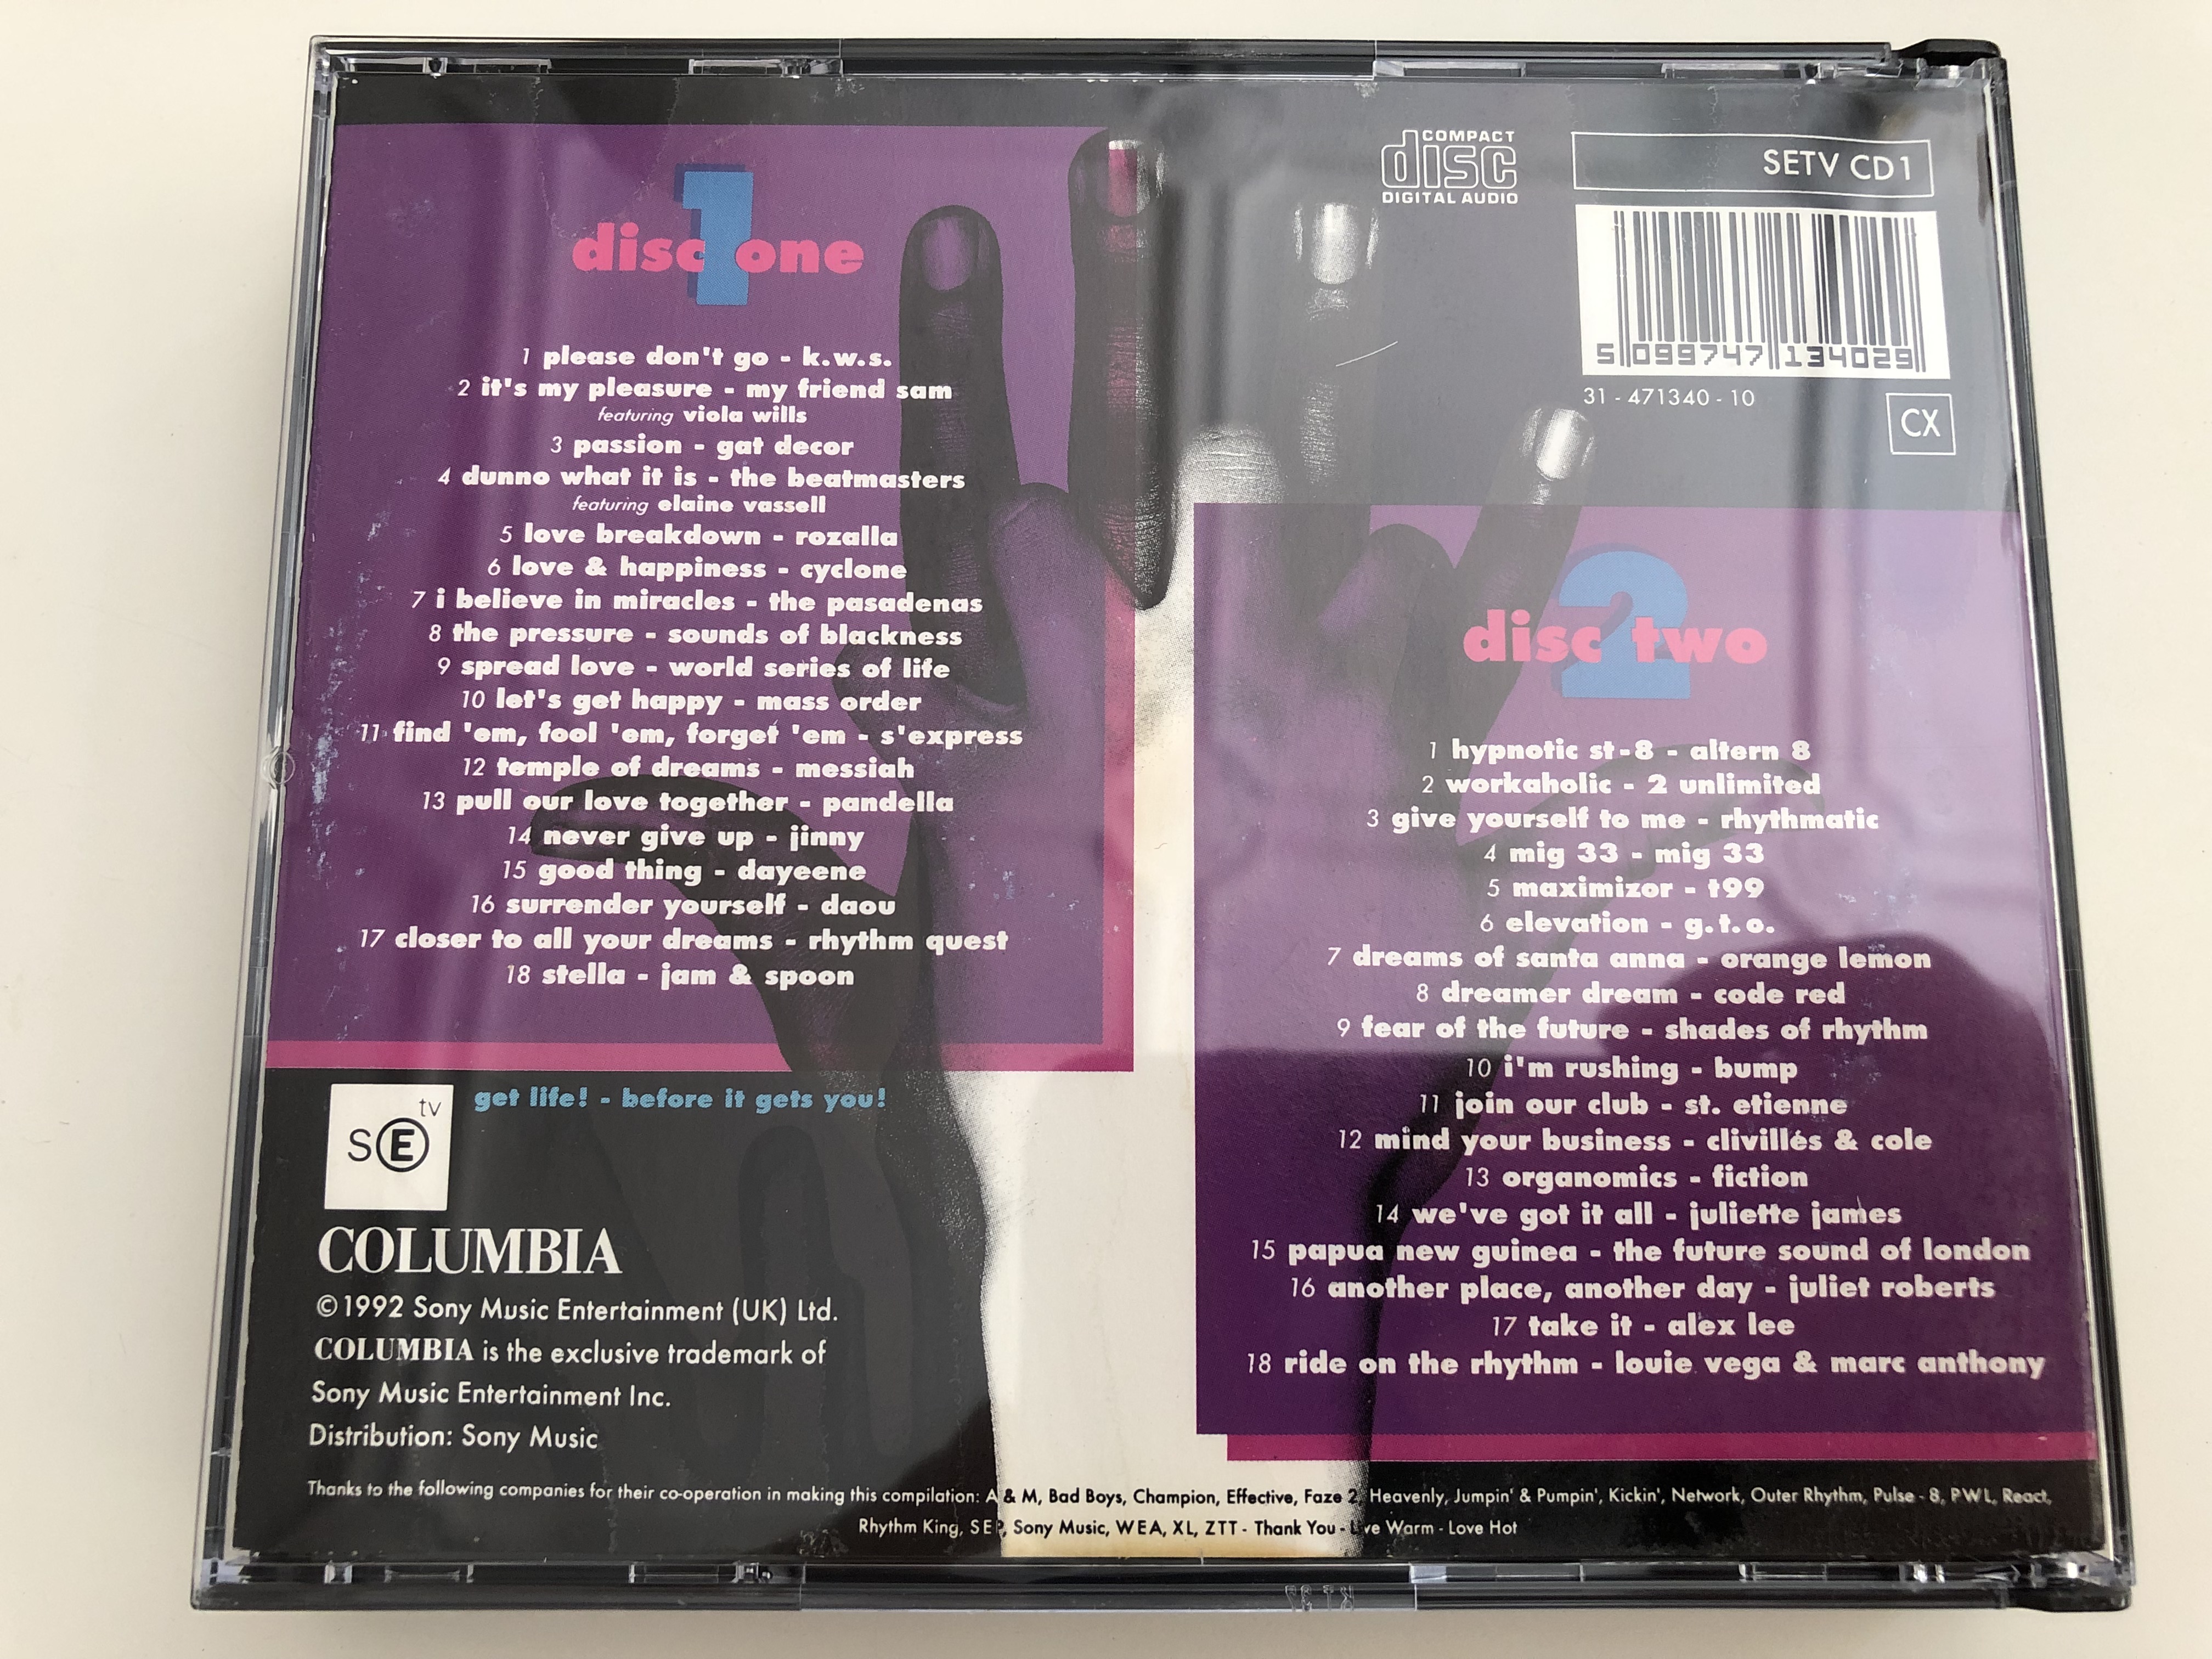 hard-fax-36-greatest-club-hits-featuring-stella-jam-spoon-hypnotic-st-8-workaholic-shades-of-rhythm-2x-audio-cd-1992-columbia-setv-cd1-7-.jpg